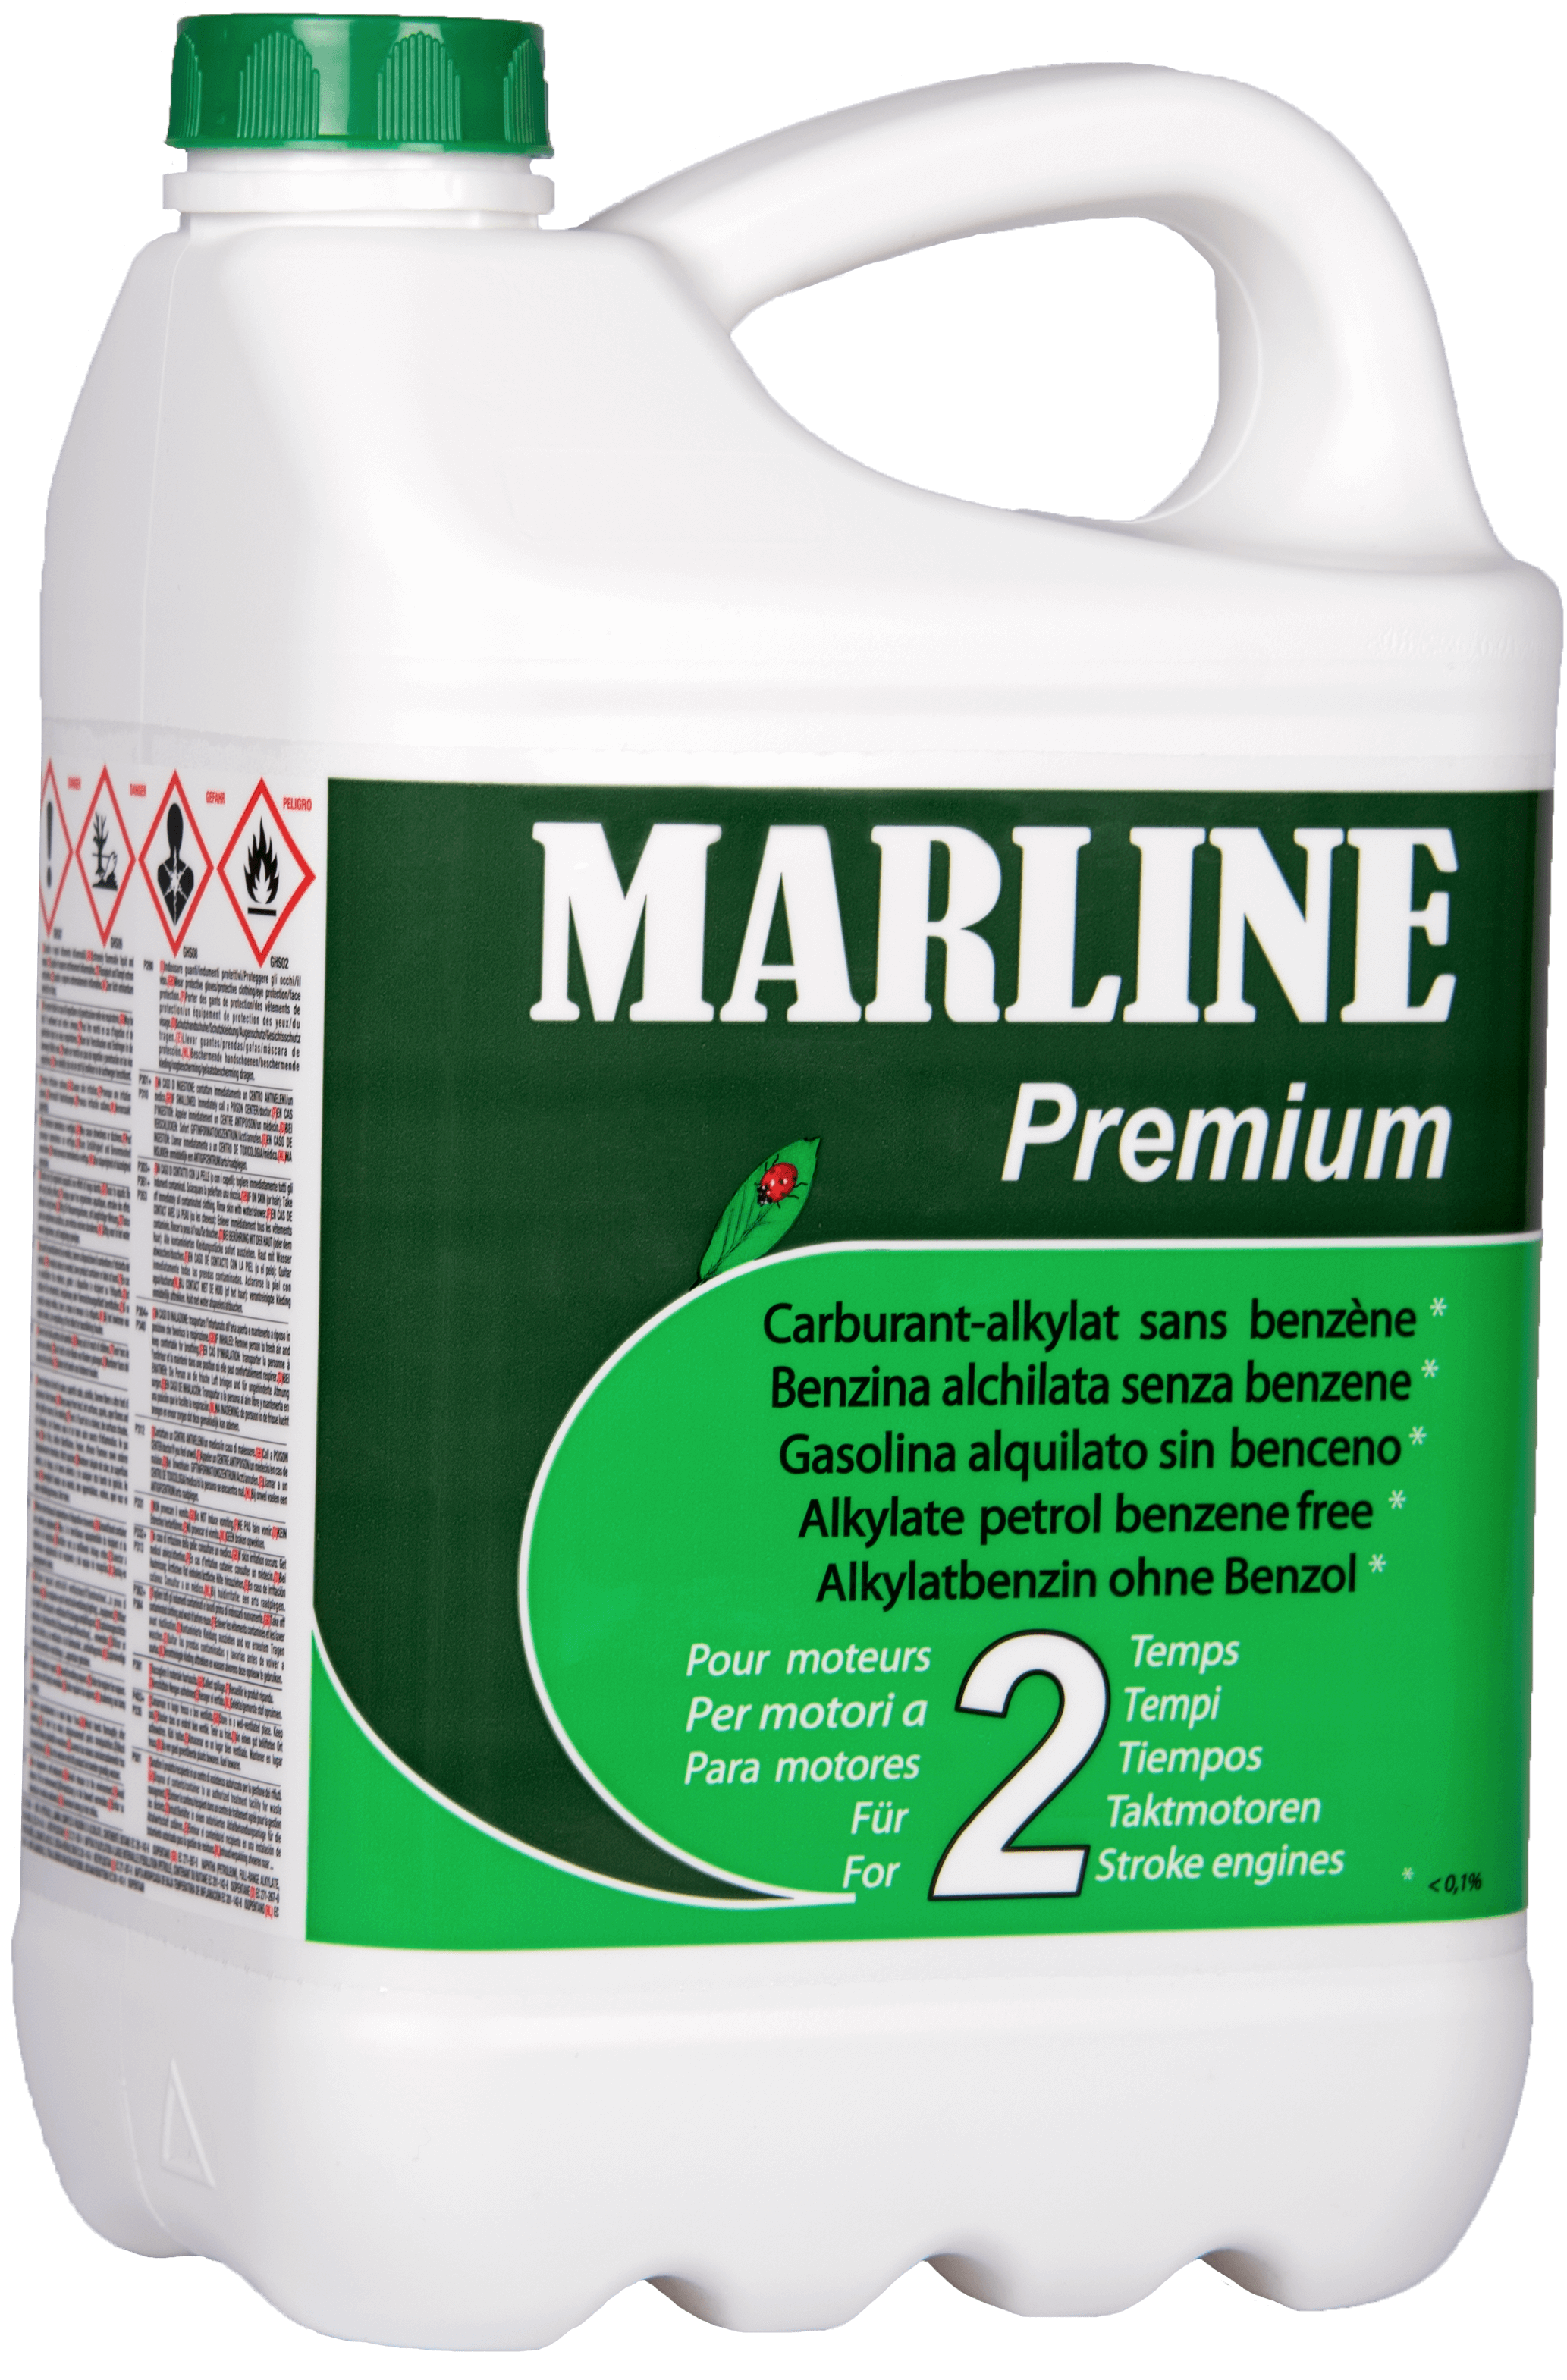 Marline logo